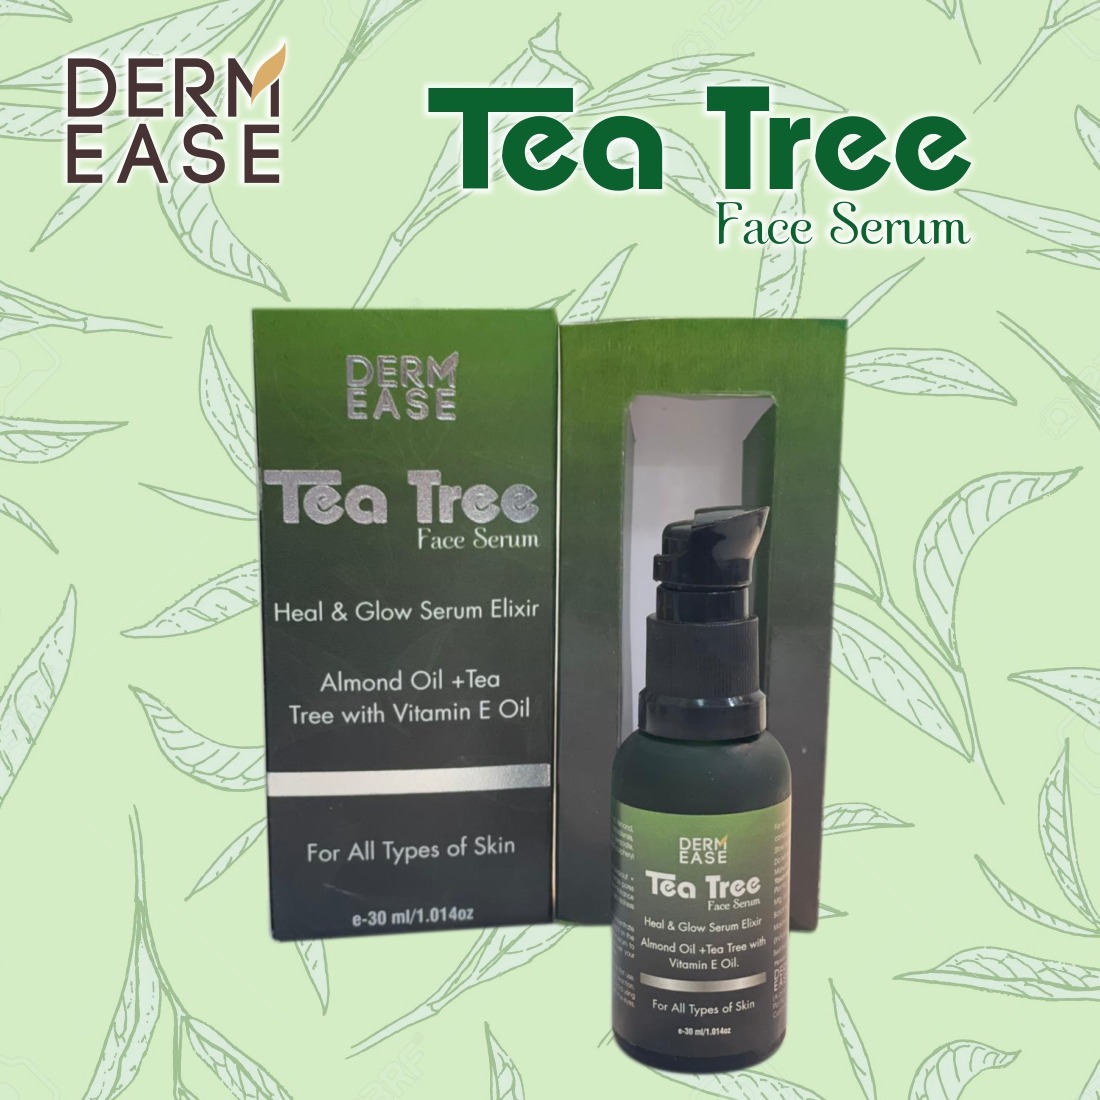 DERM EASE Tea Tree Face Serum